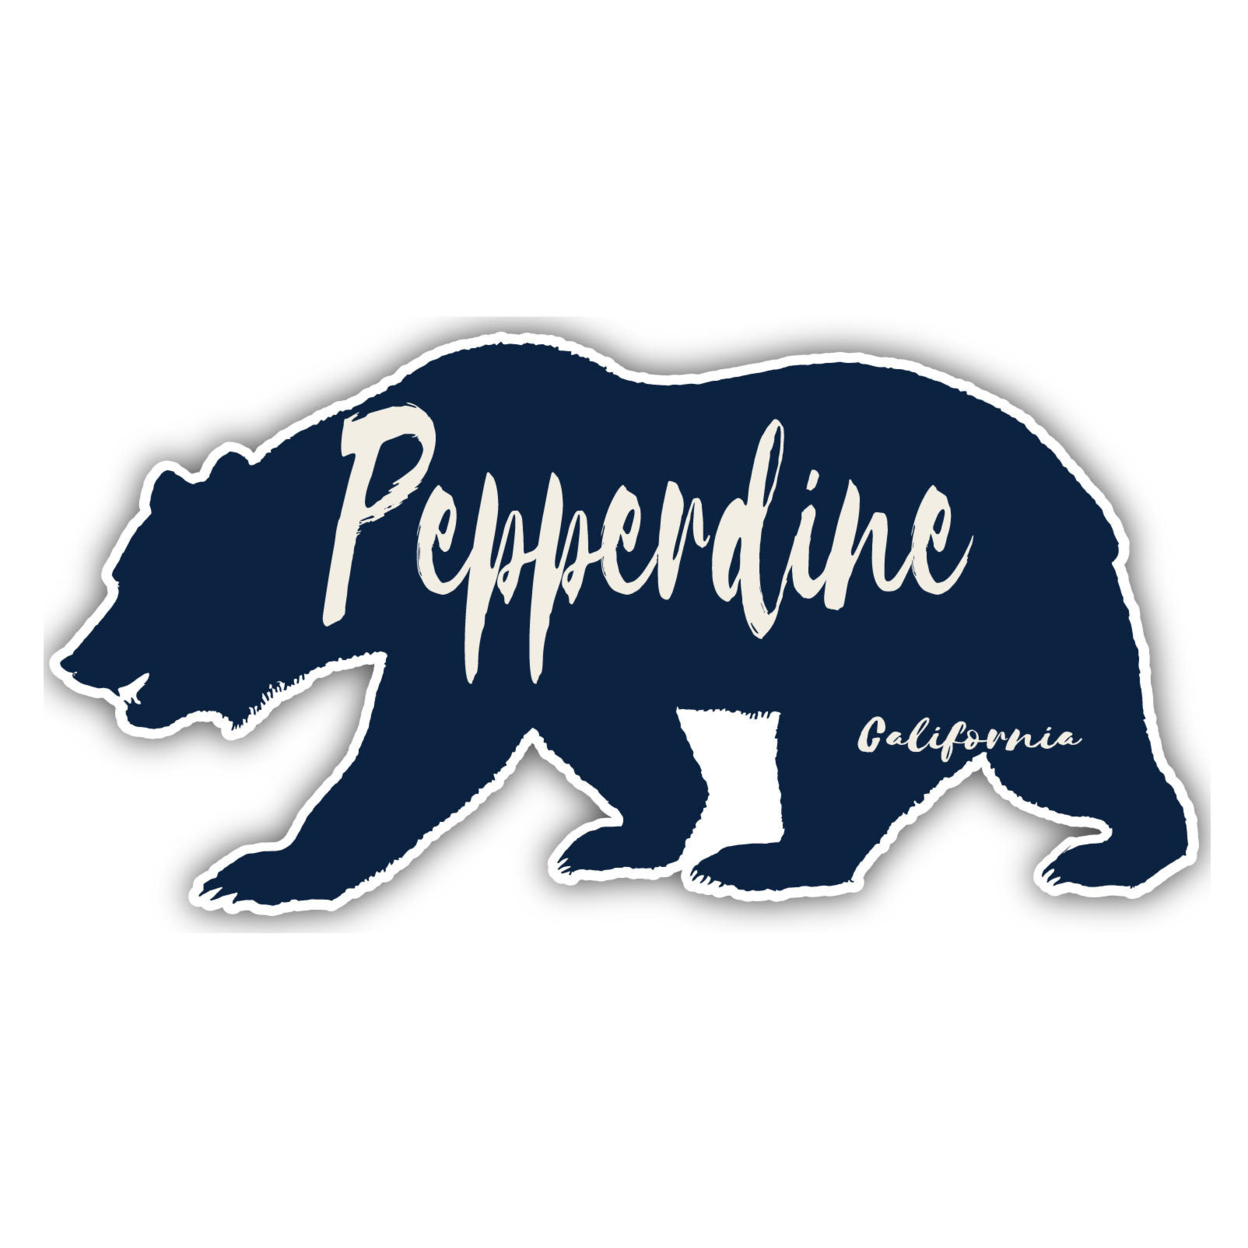 Pepperdine California Souvenir Decorative Stickers (Choose Theme And Size) - Single Unit, 4-Inch, Tent